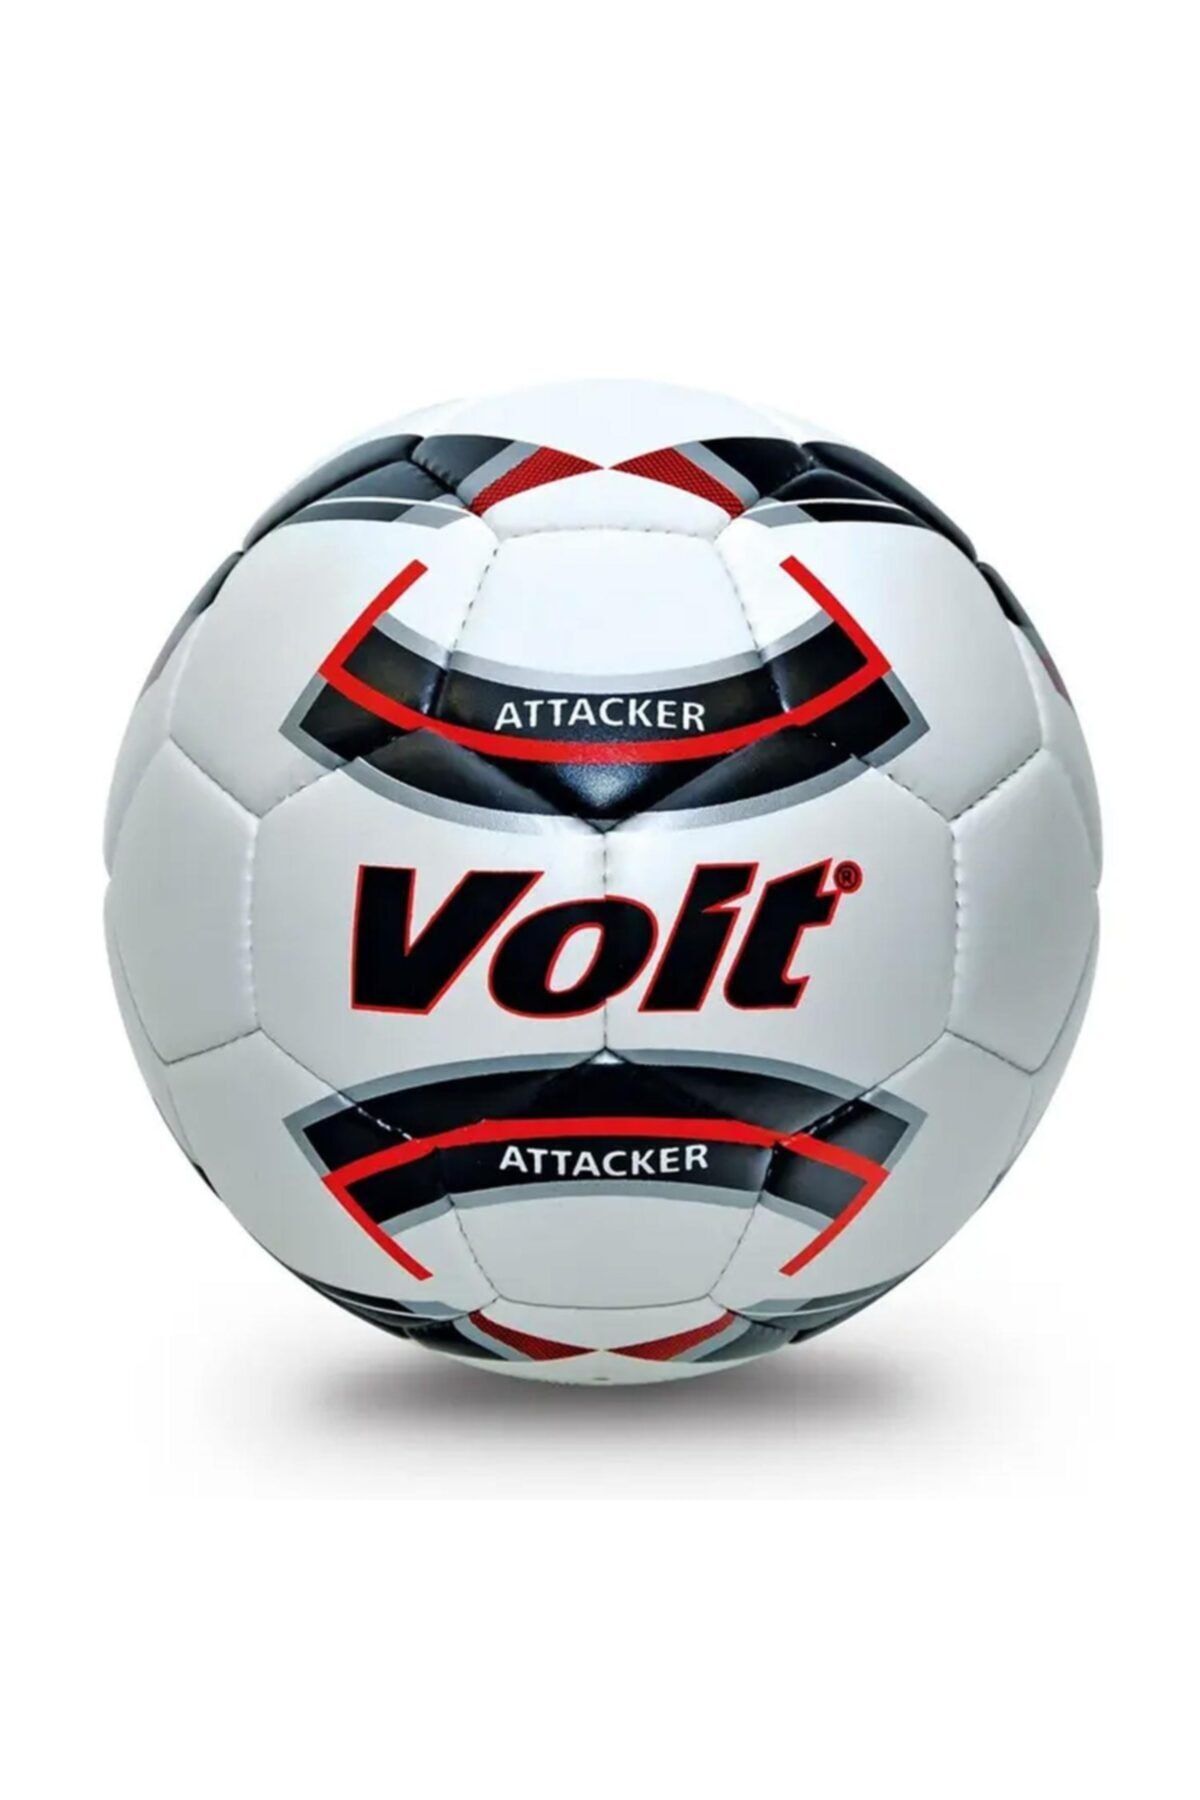 Voit Attacker Futbol Topu Dikişli 5 Numara Beyaz Top